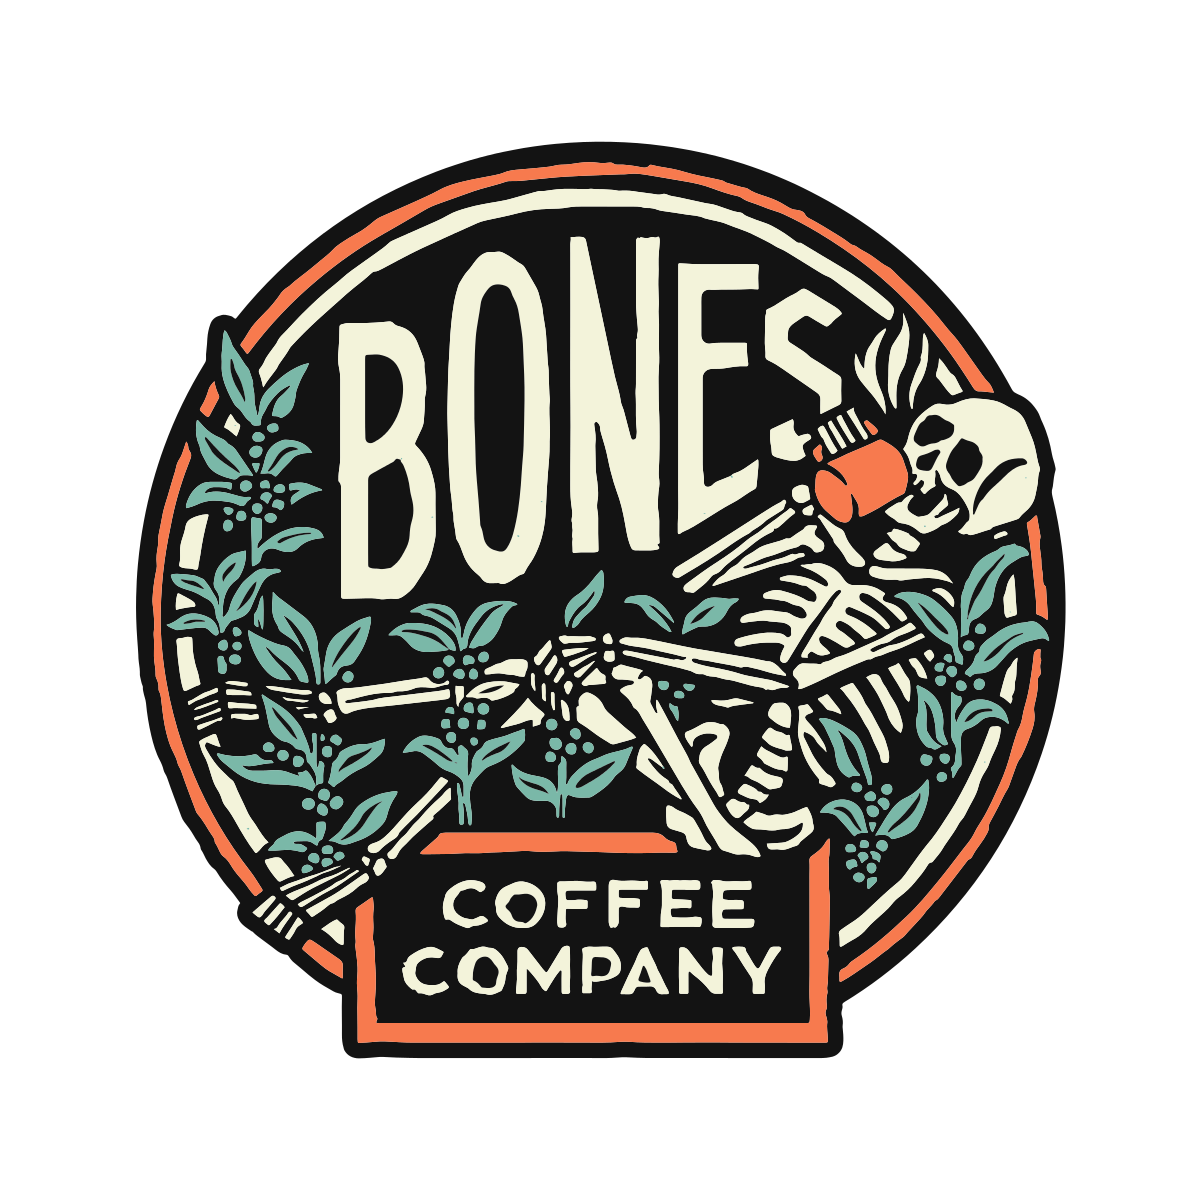 The Bones Coffee Company logo.